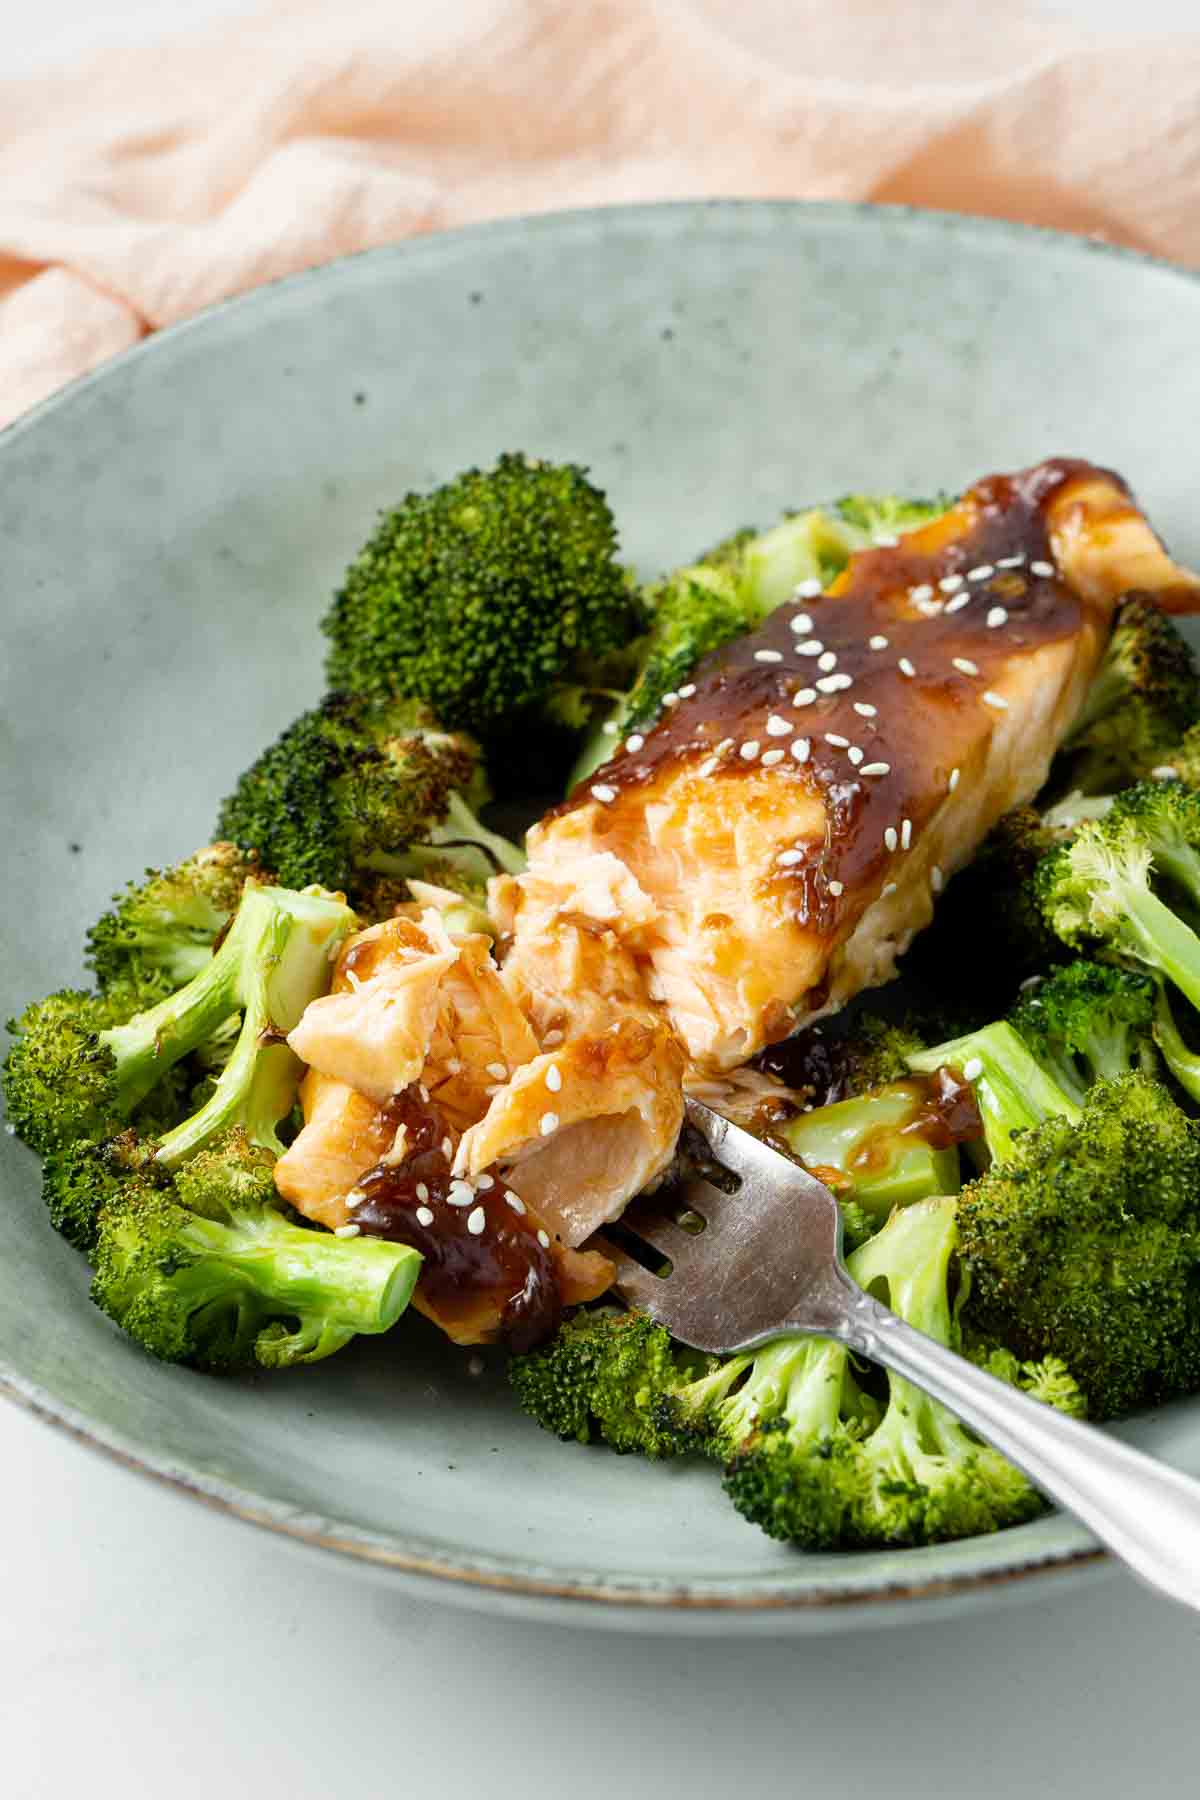 Flakey baked salmon on broccoli.